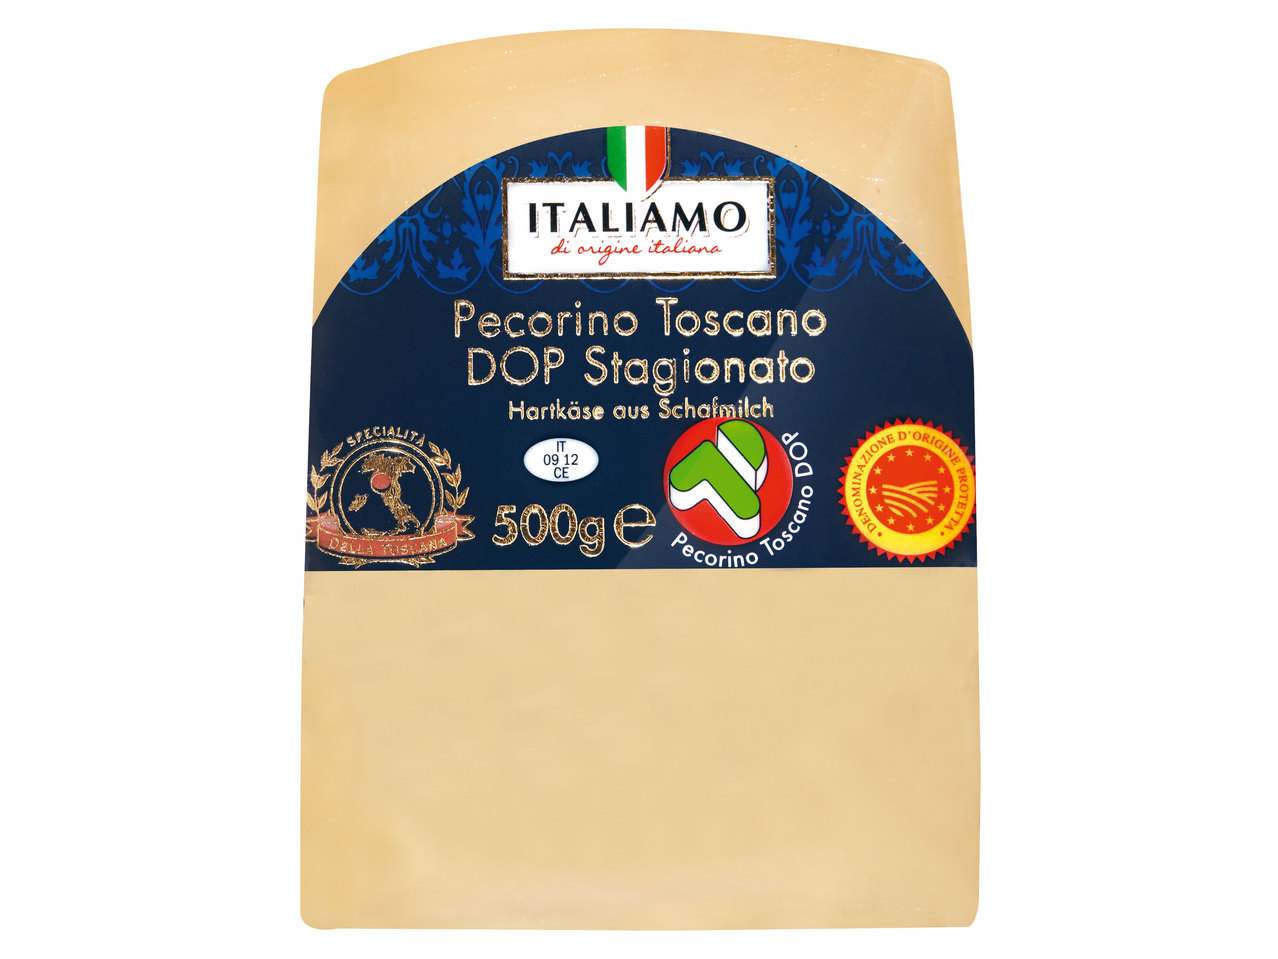 ITALIAMO Pecorino Toscano DOP